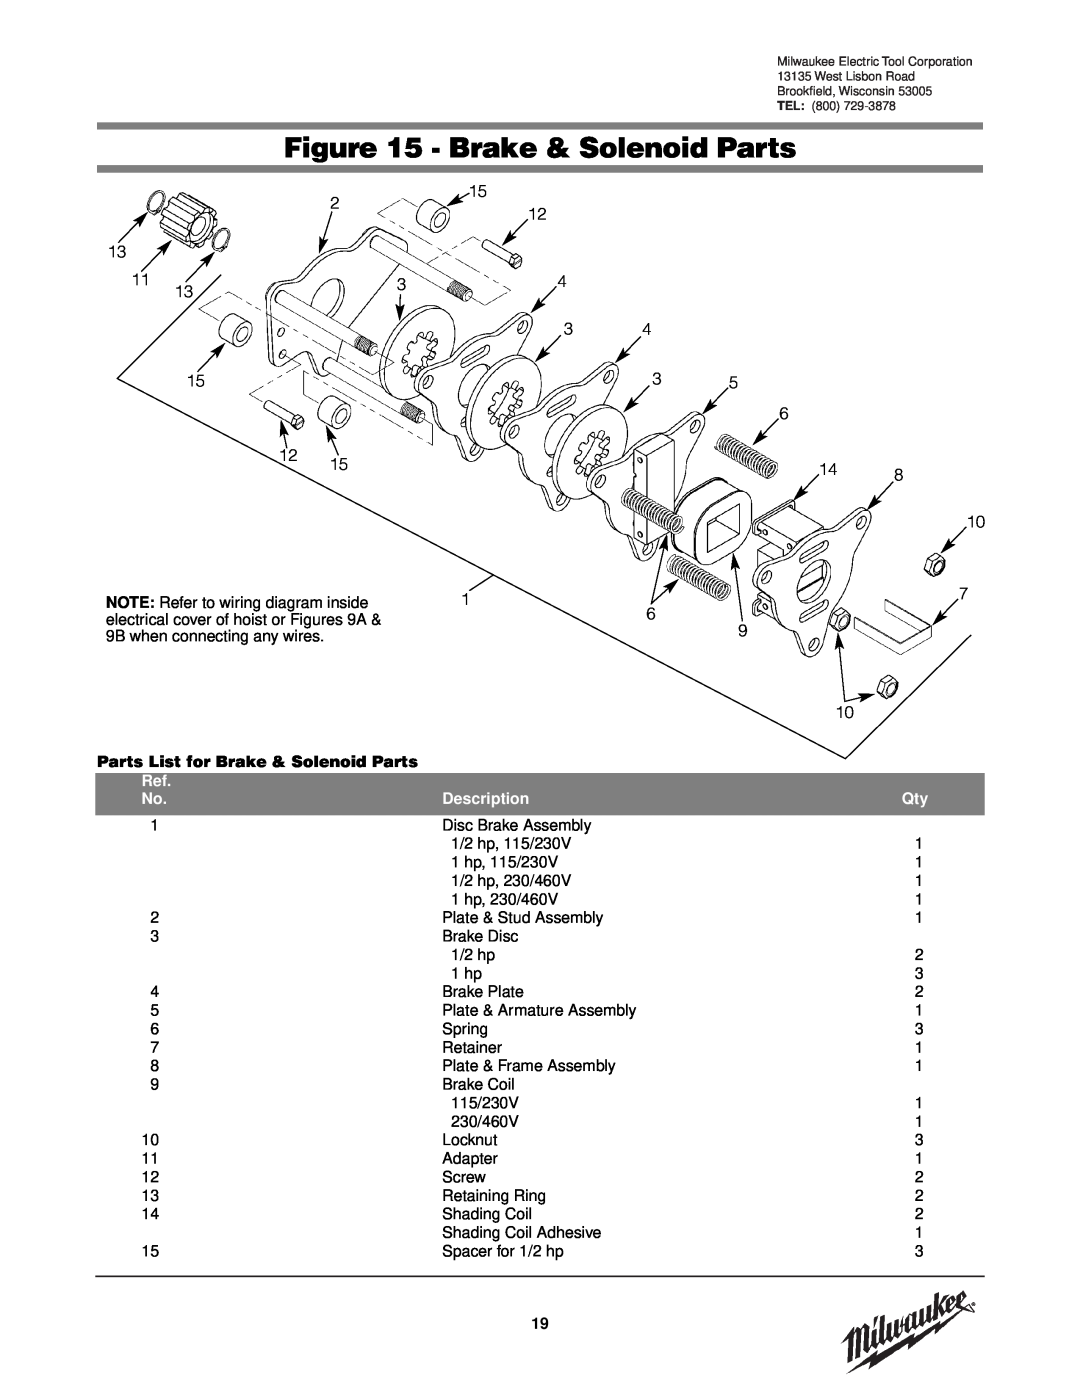 Milwaukee 9566, 9572, 9573, 9571, 9568, 9570, 9565, 9560, 9561, 9567 Parts List for Brake & Solenoid Parts Ref, Description 